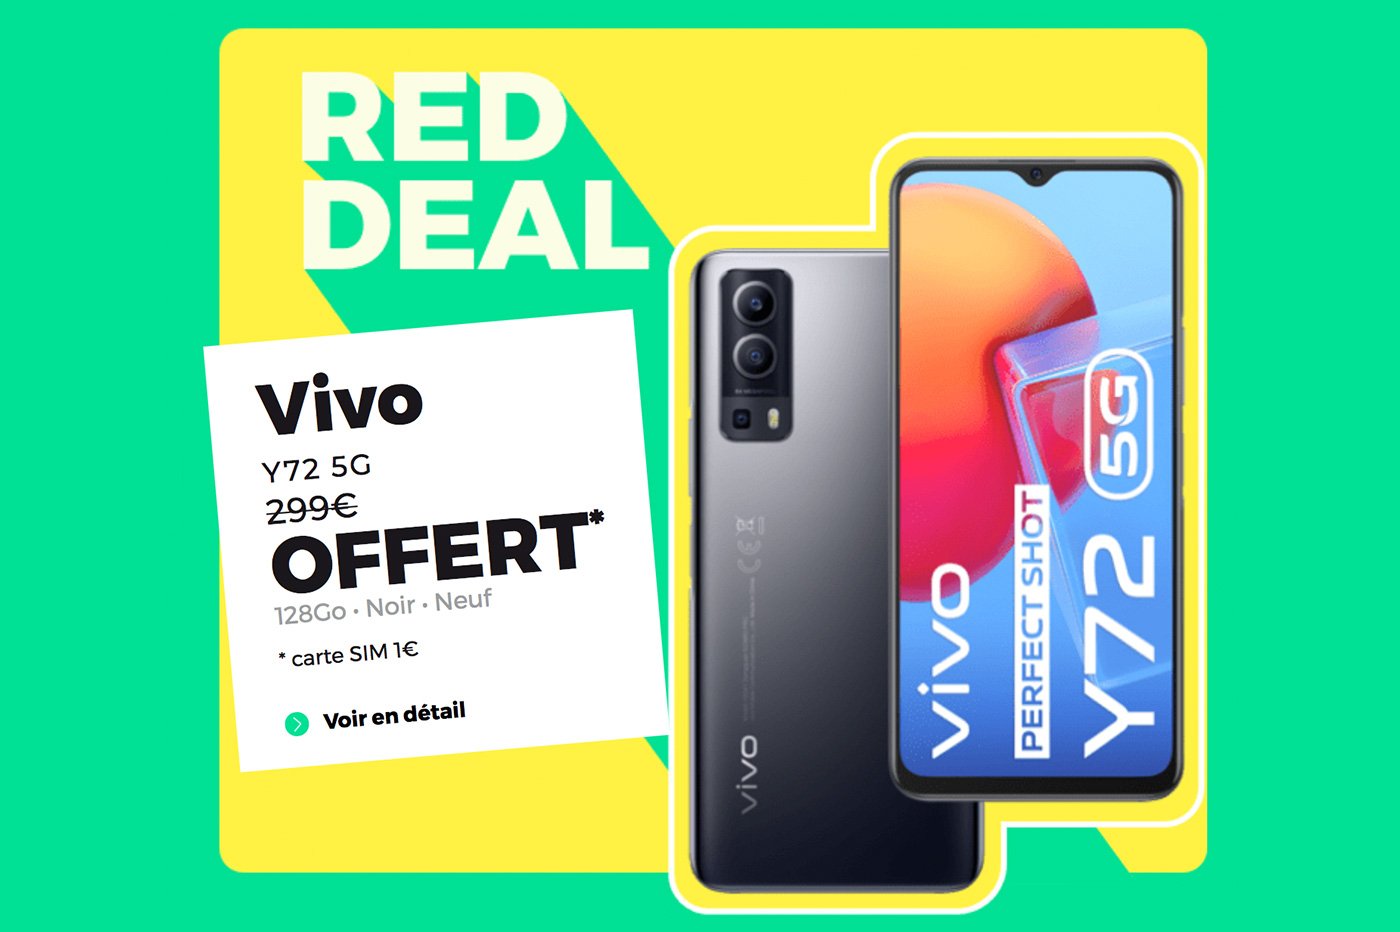 Vivo Y72 5G RED Deal